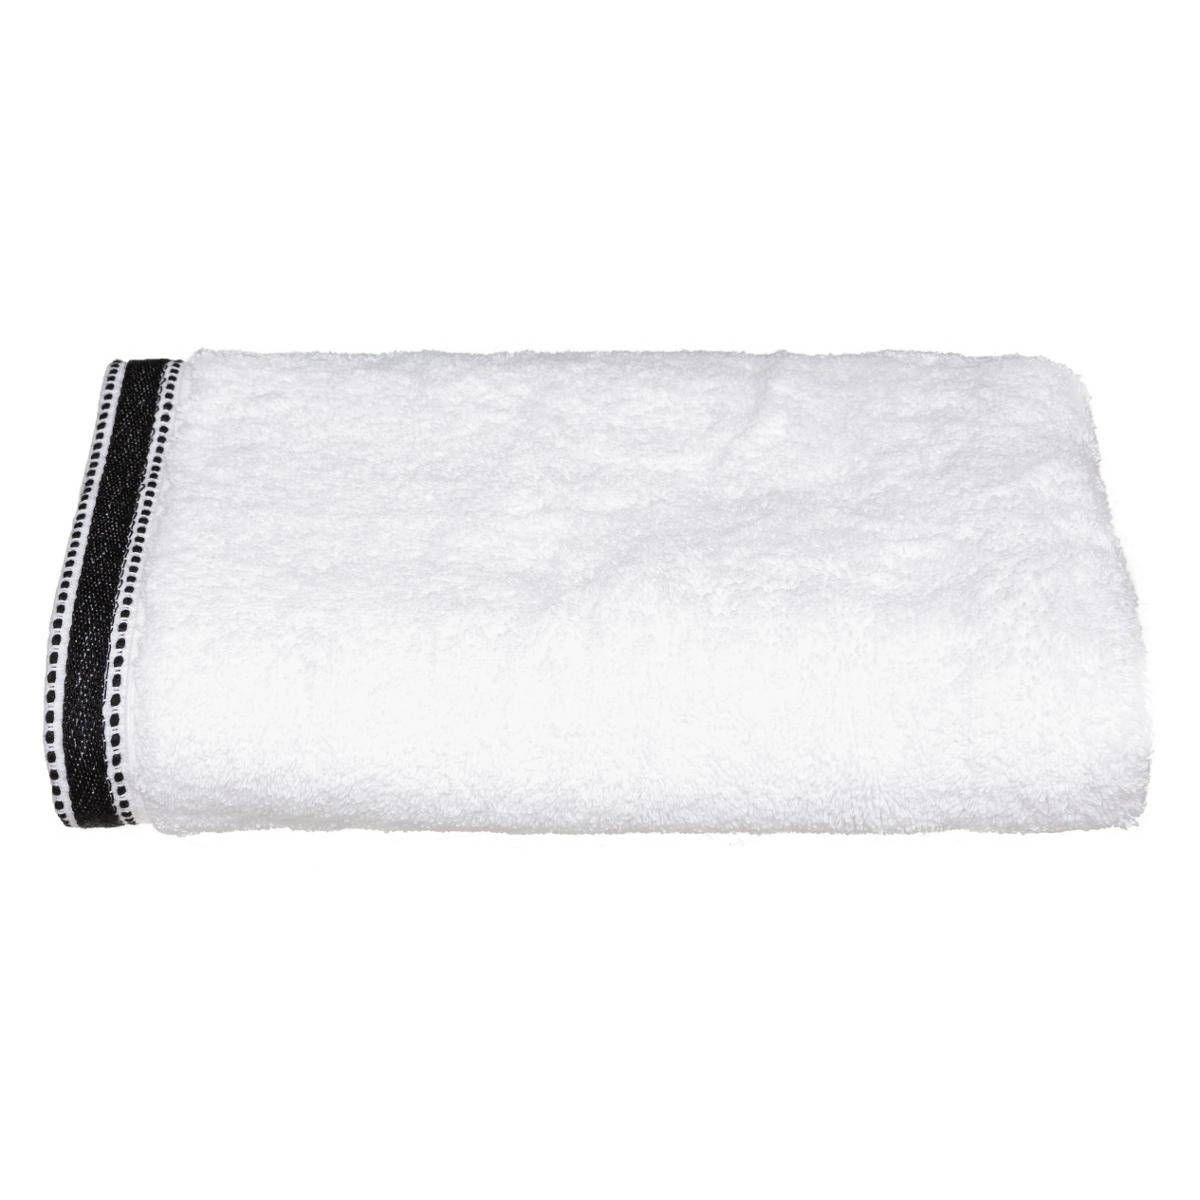 Atmosphera Bavlněný ručník JOIA, 70 x 130 cm, bílá barva - EMAKO.CZ s.r.o.